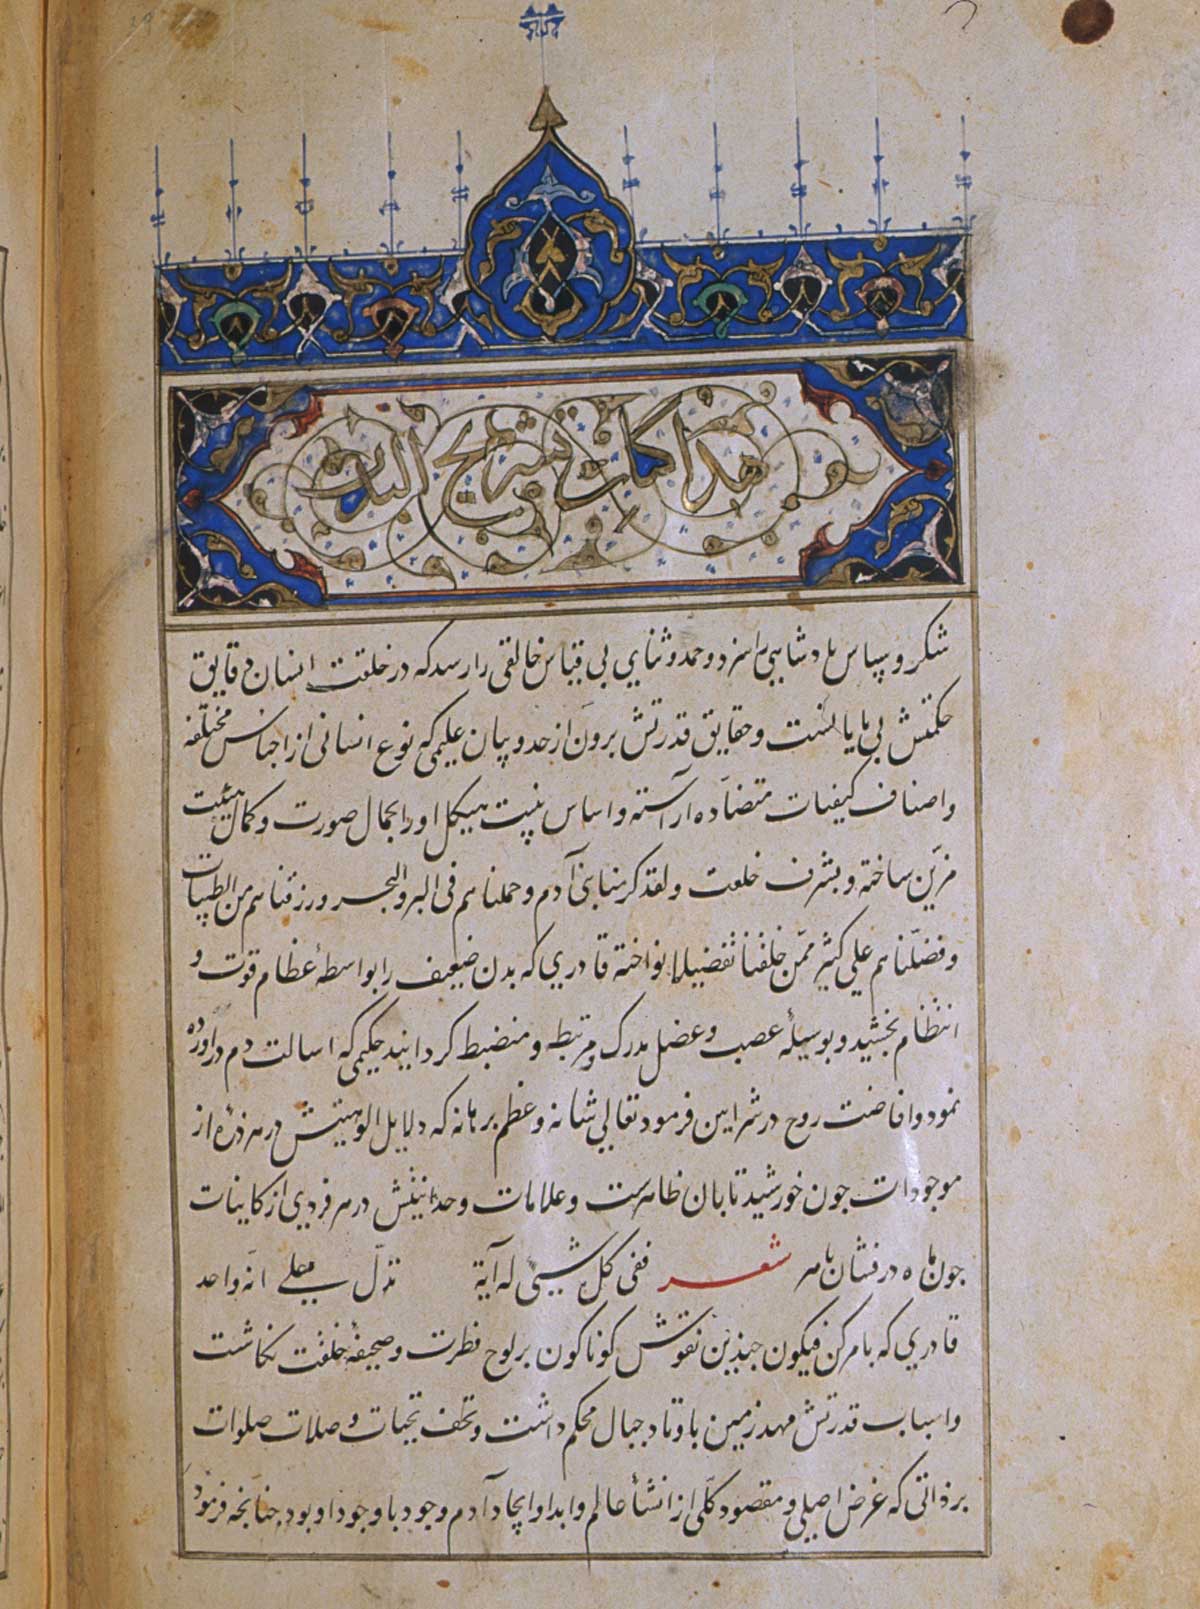 Folio 1b of Mansur ibn Ilyas' Tashrih-i badan-i insan, featuring the illuminated opening giving the title of the treatise in Arabic (hadha kitab Tashrih al-badan), drawn in ink and opaque watercolours.